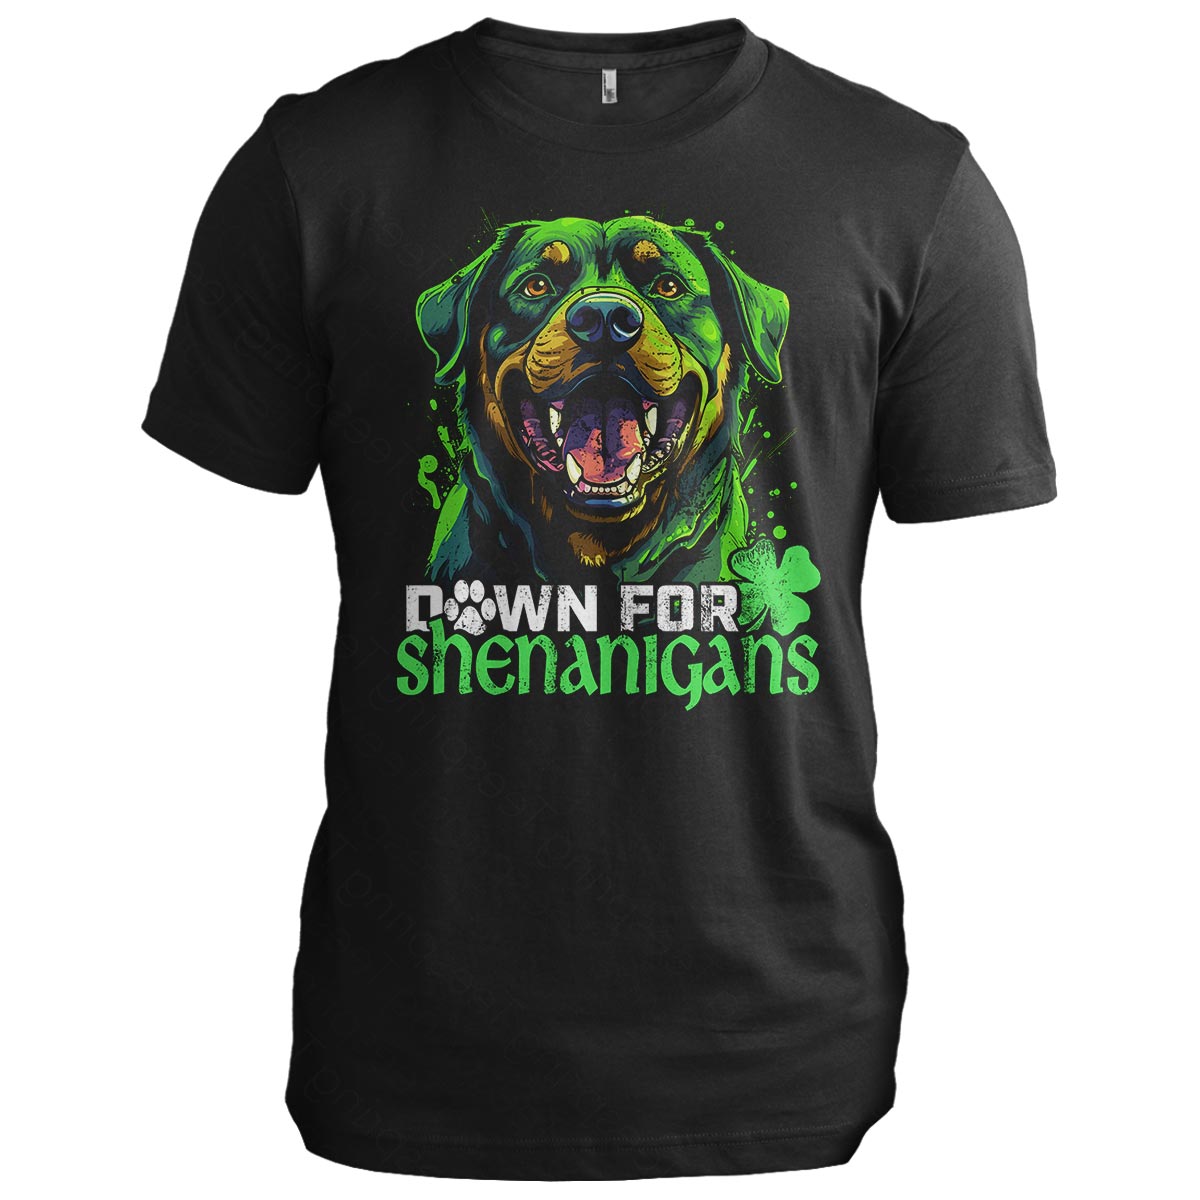 Down for Shenanigans: Rottweiler